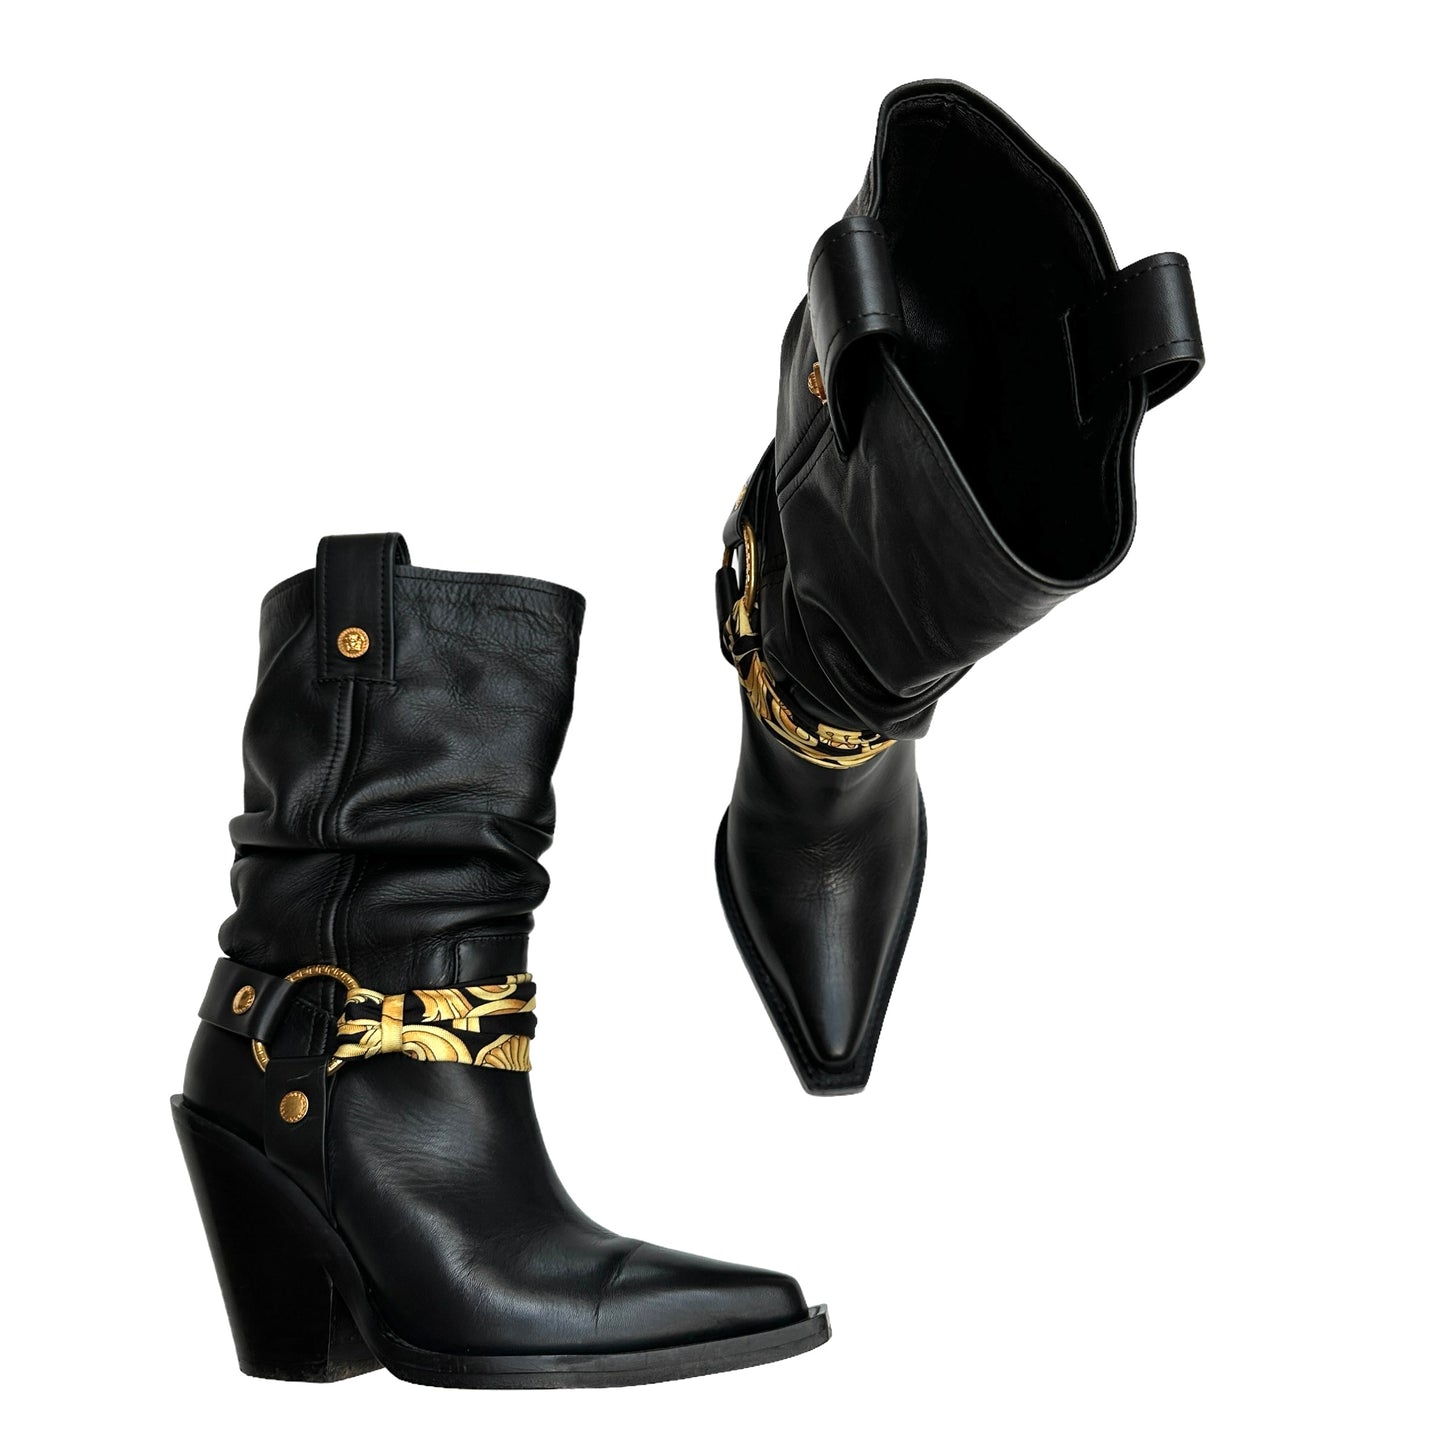 Black Cowboy Heeled Boots - 5.5